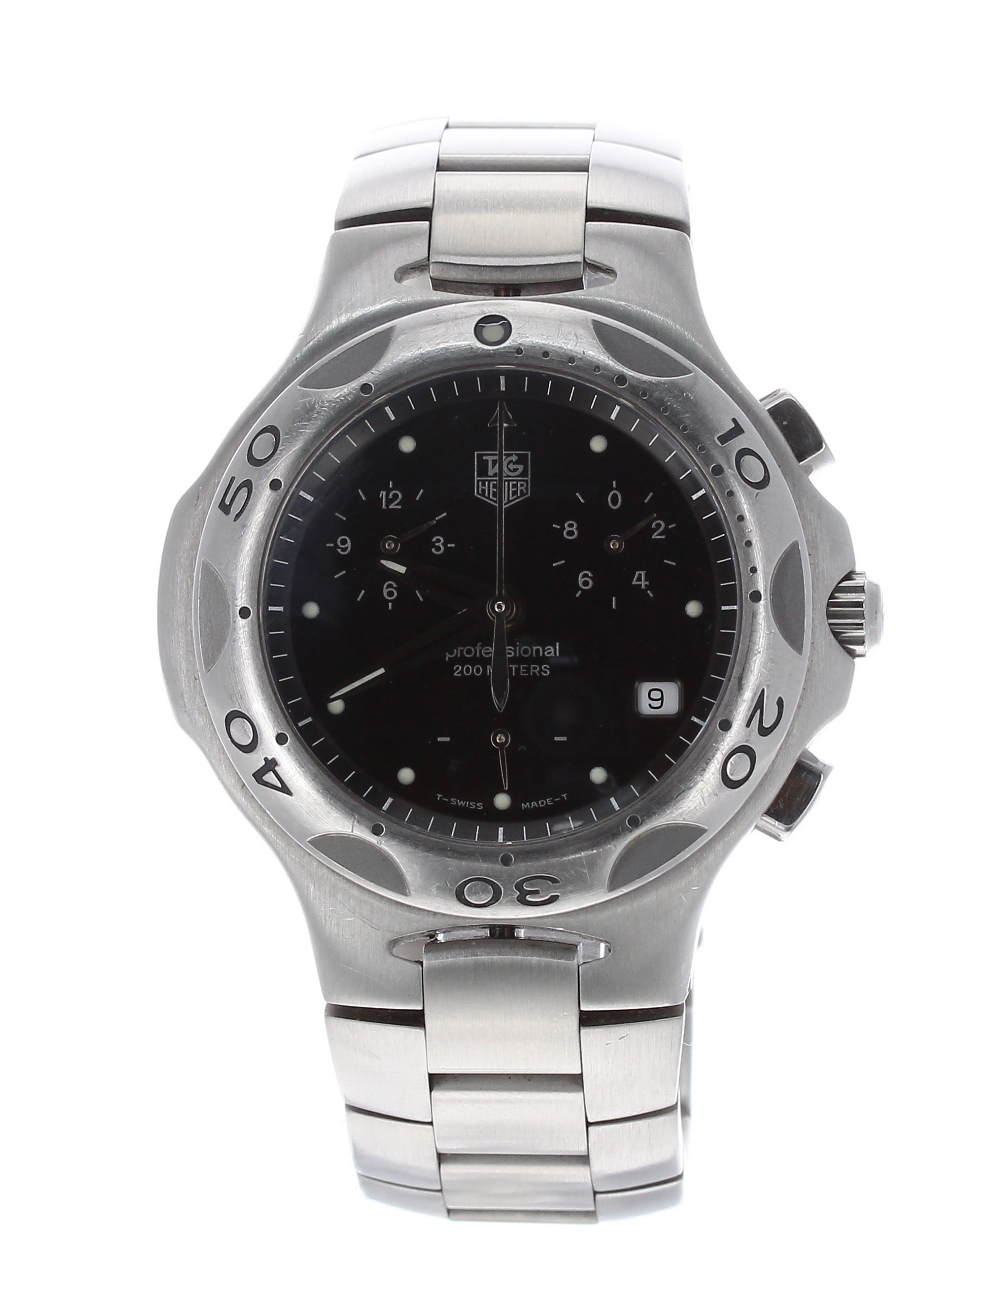 Tag Heuer Kirium Professional 200m Chronograph stainless steel gentleman's bracelet watch, ref.